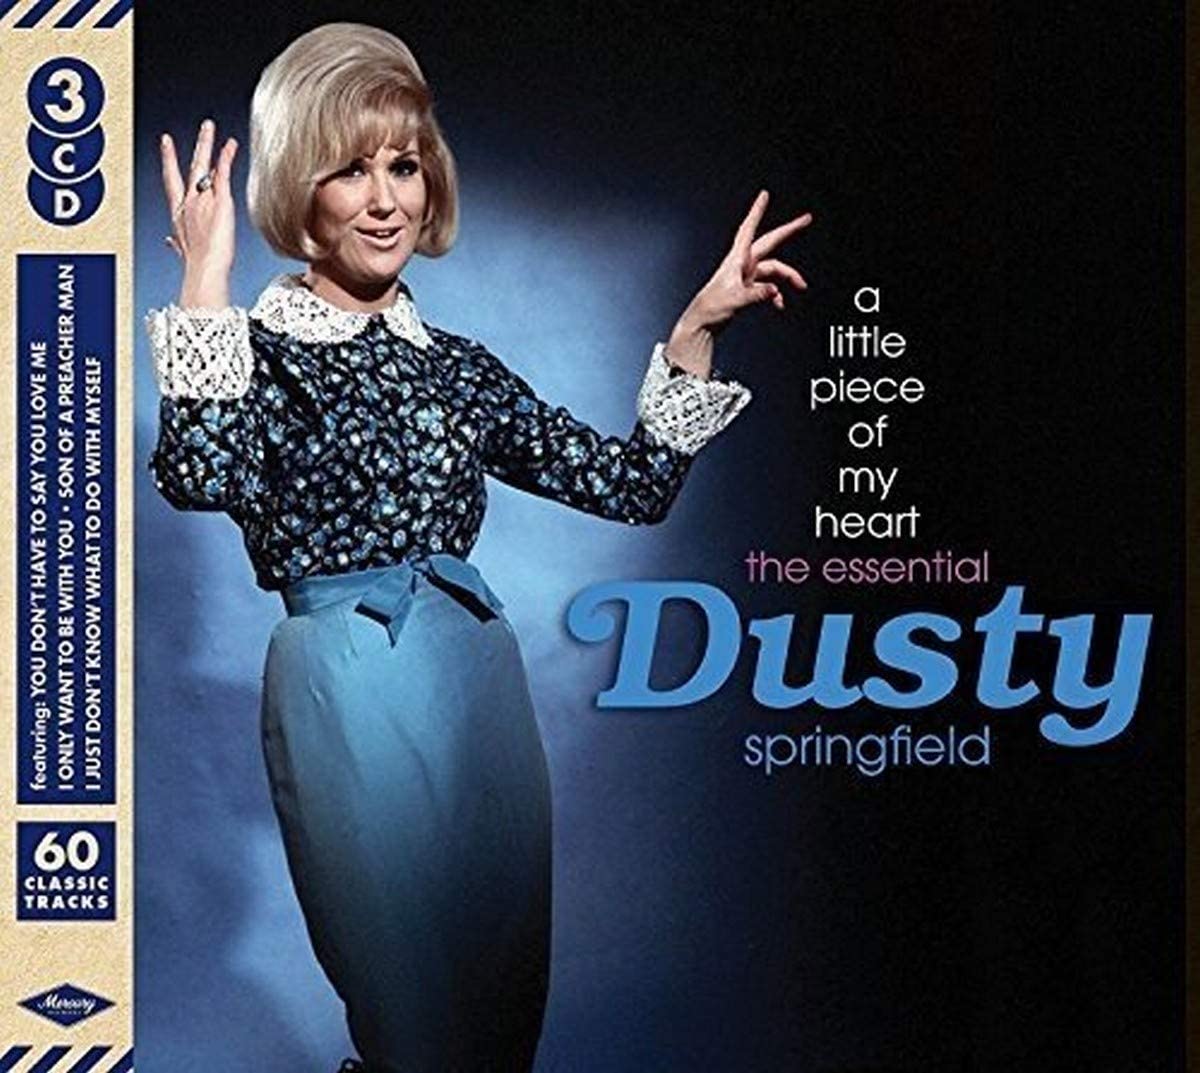 Dusty Springfield - A Little Piece of My Heart - 3 CD Box Set